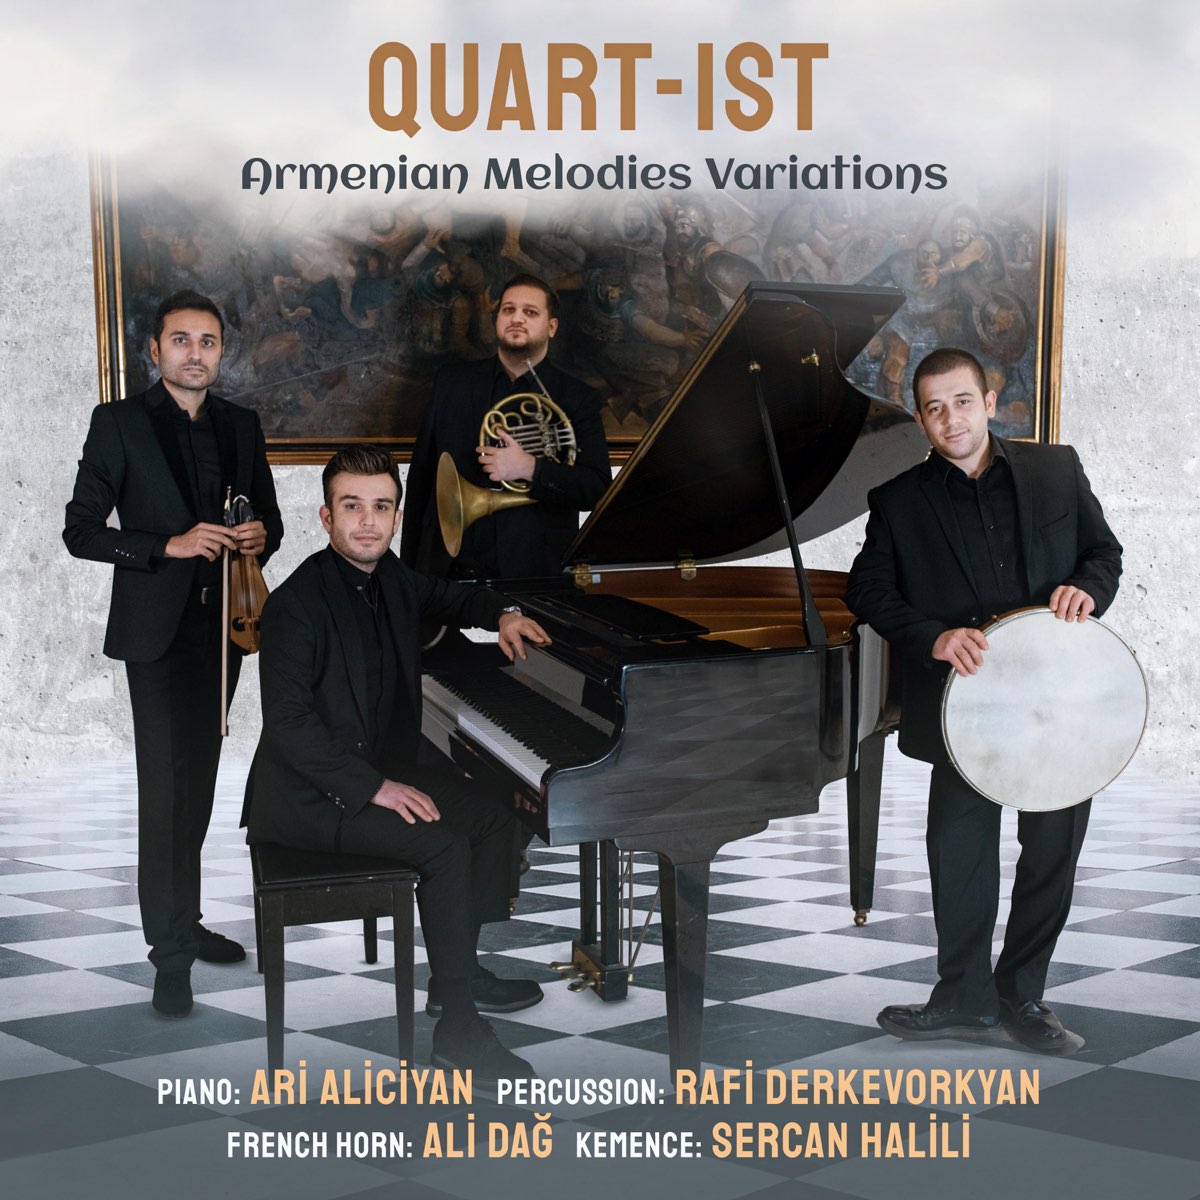 Quart-Ist Armenian Melodies Variations